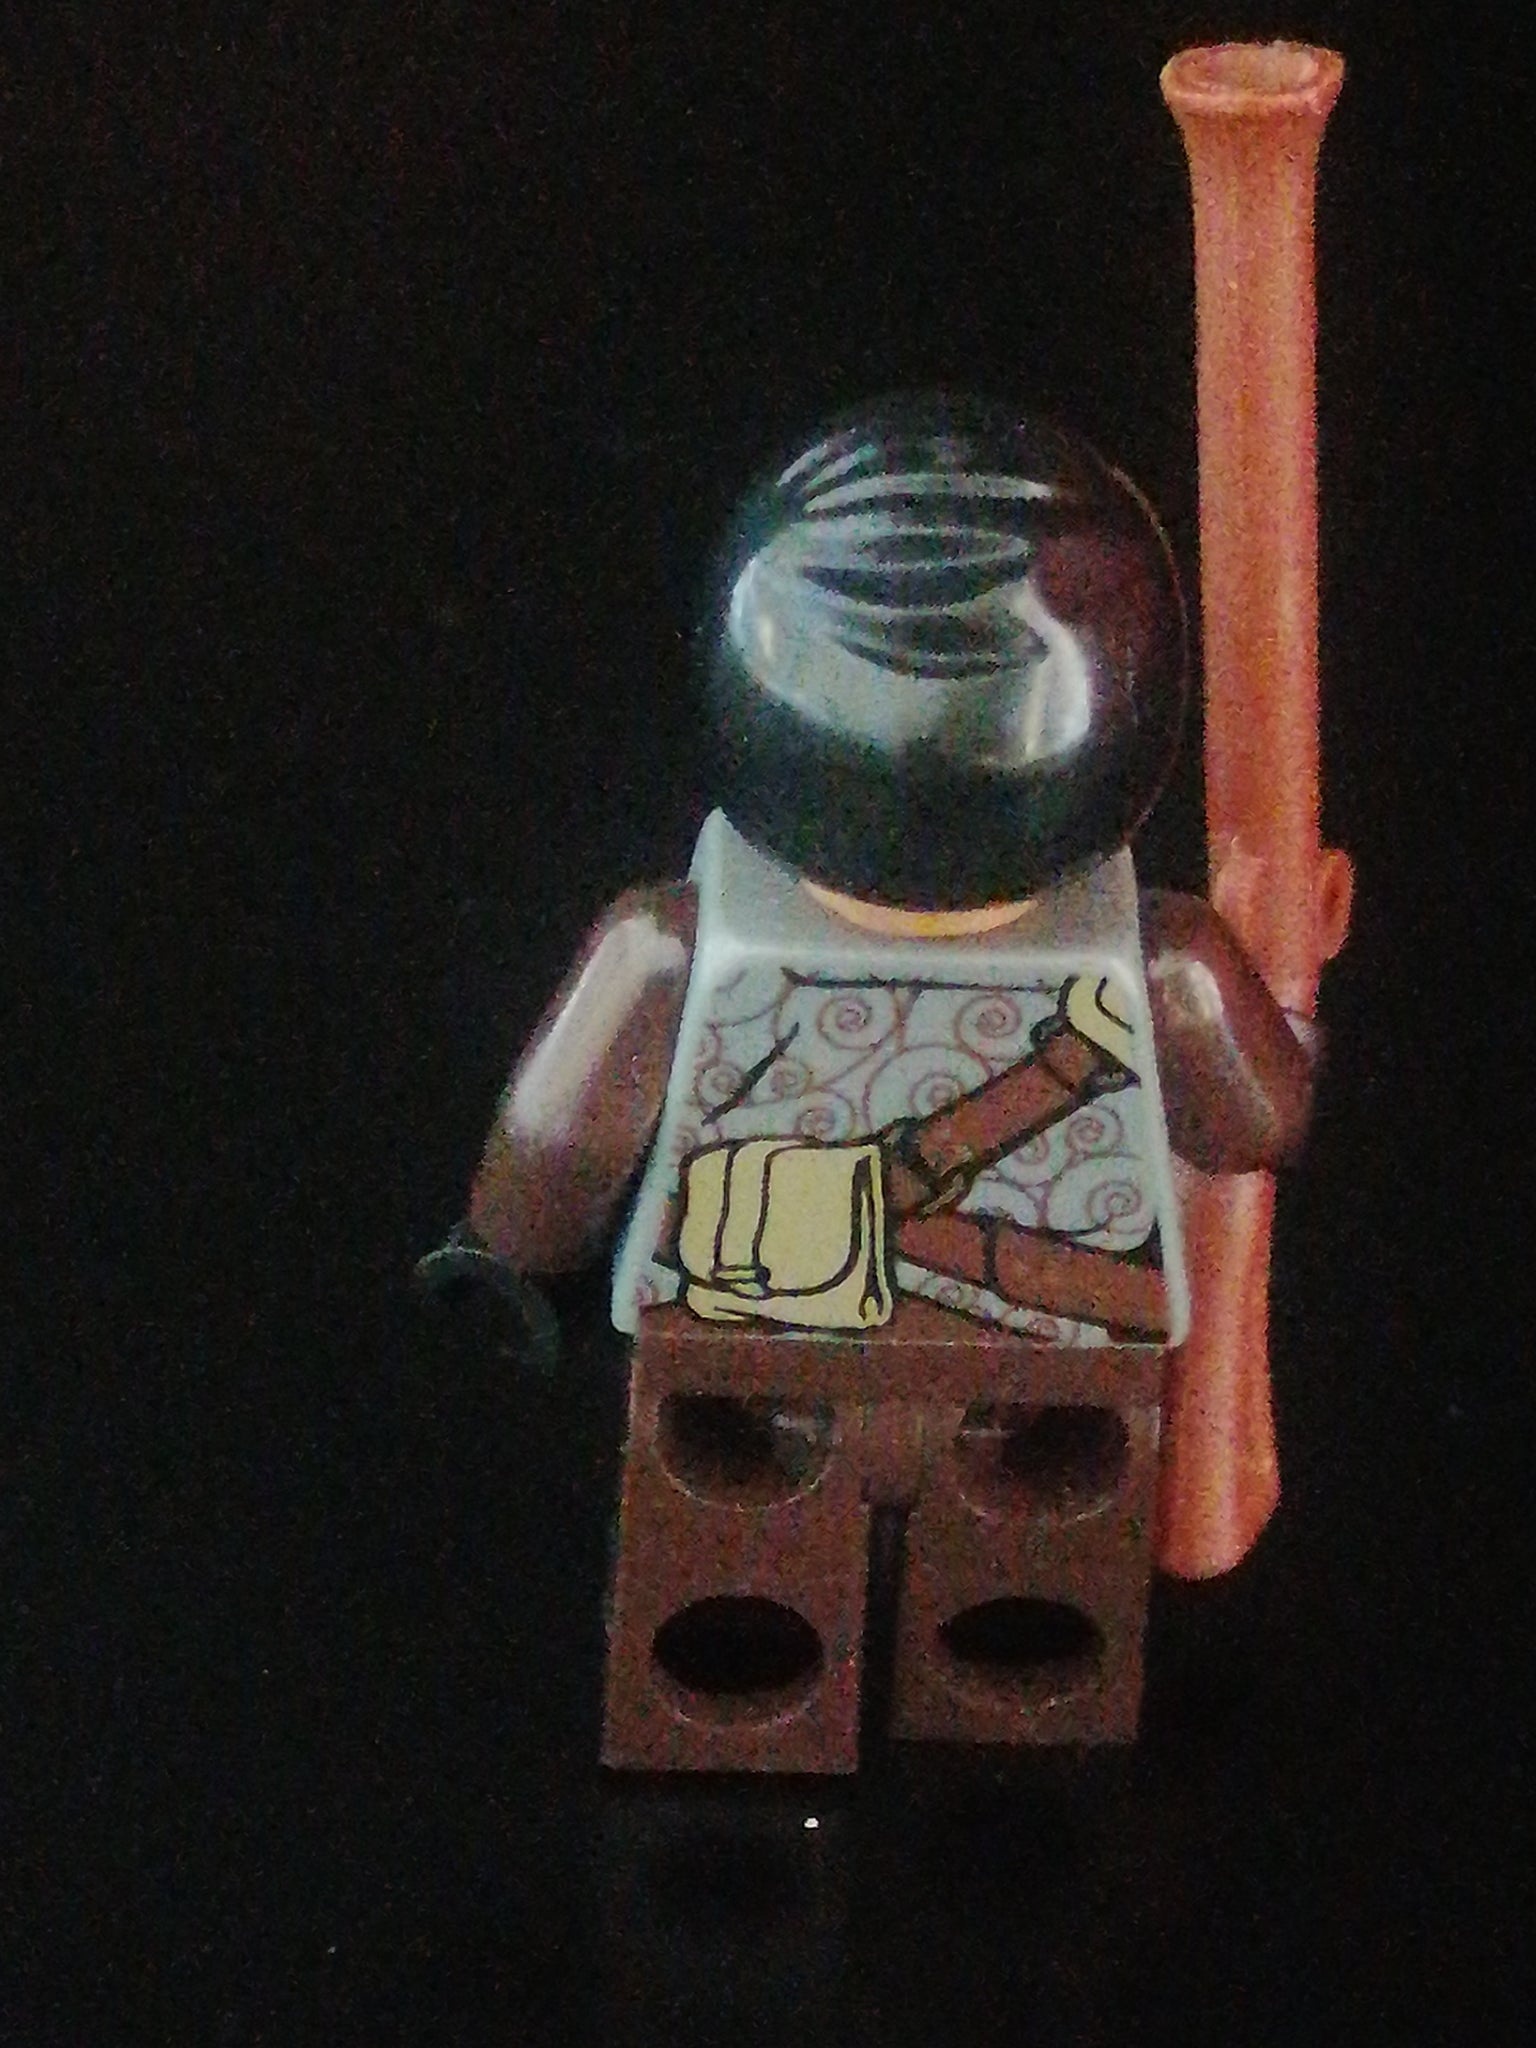 figurine lego ninjago lloyd – piecesajouets17